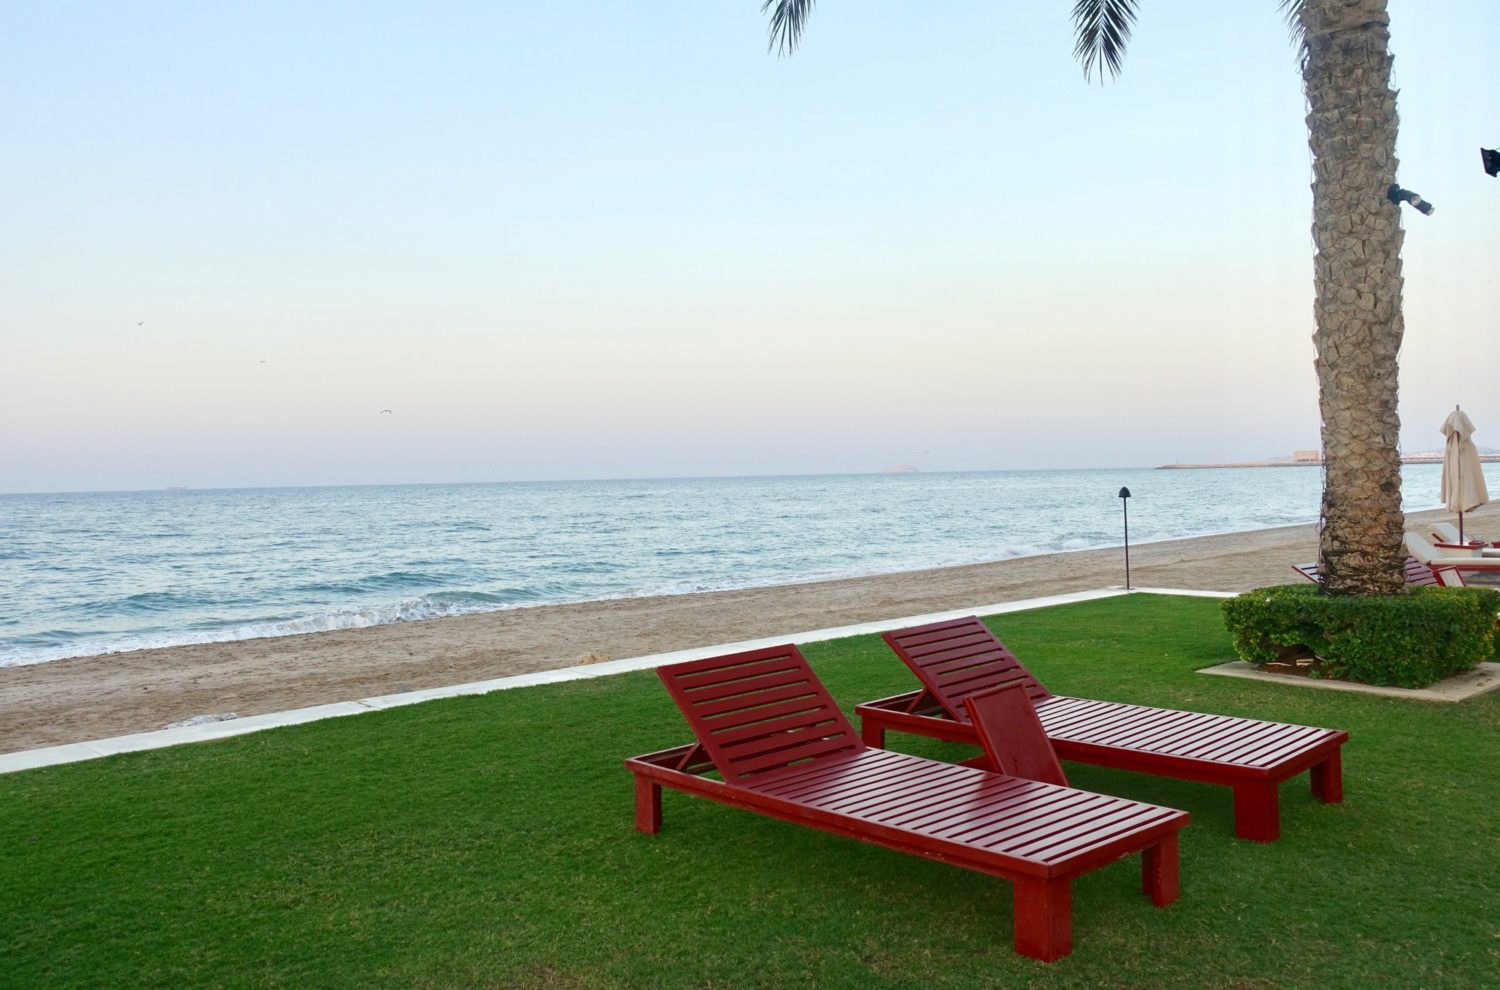 Chedi Muscat beach chairs at dusk